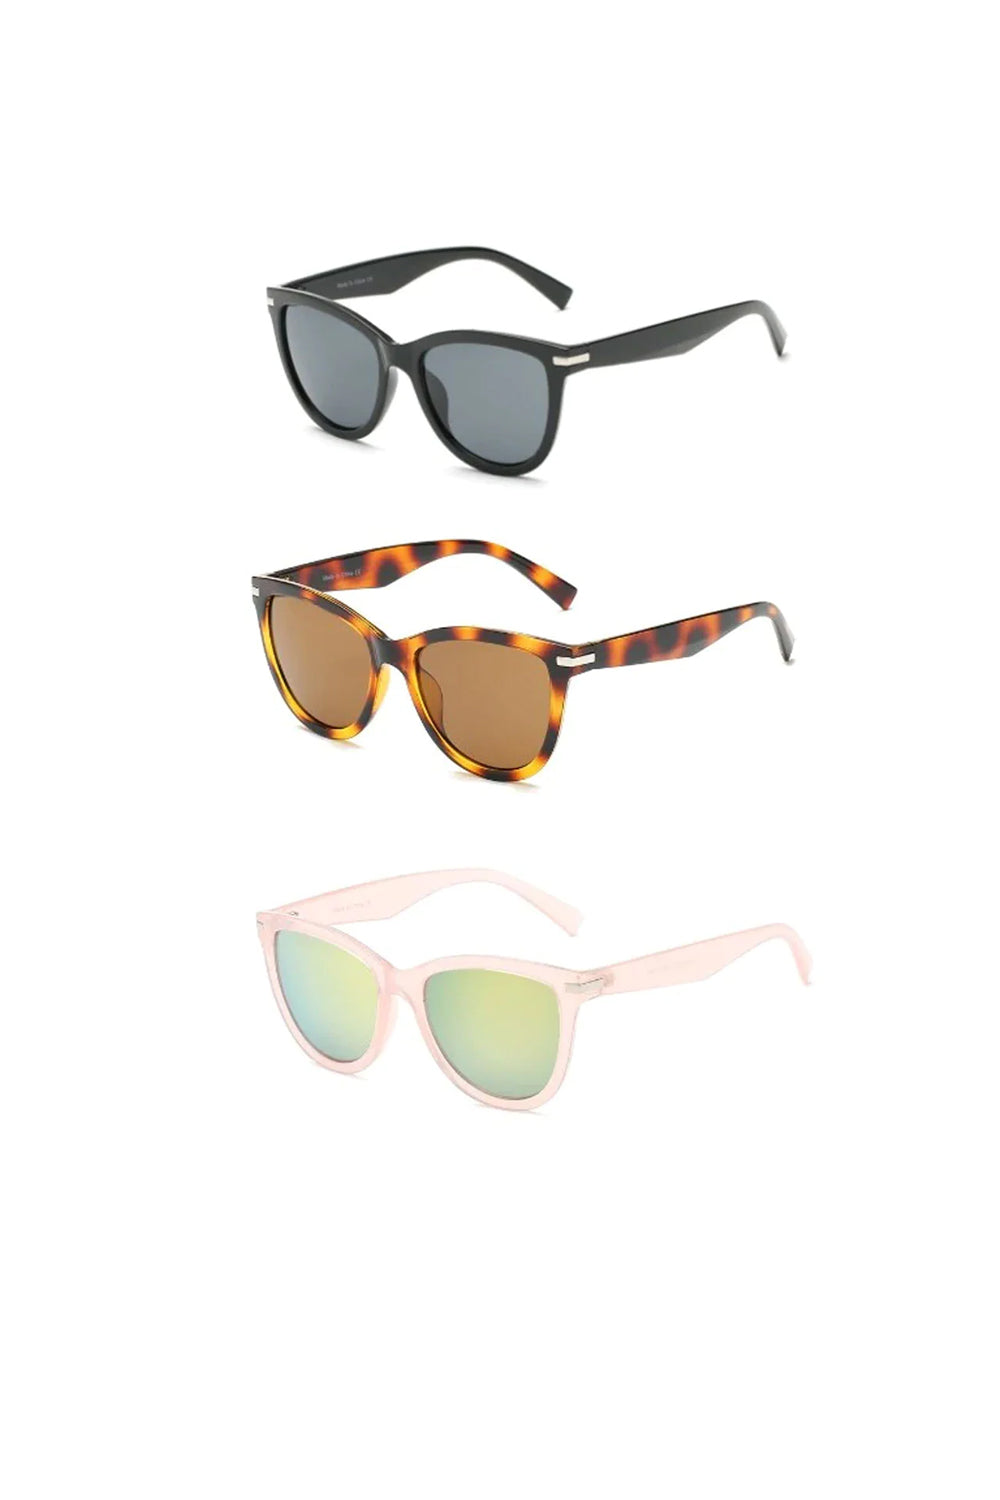 Women's Cat Eye Fashion Sunglasses - Black